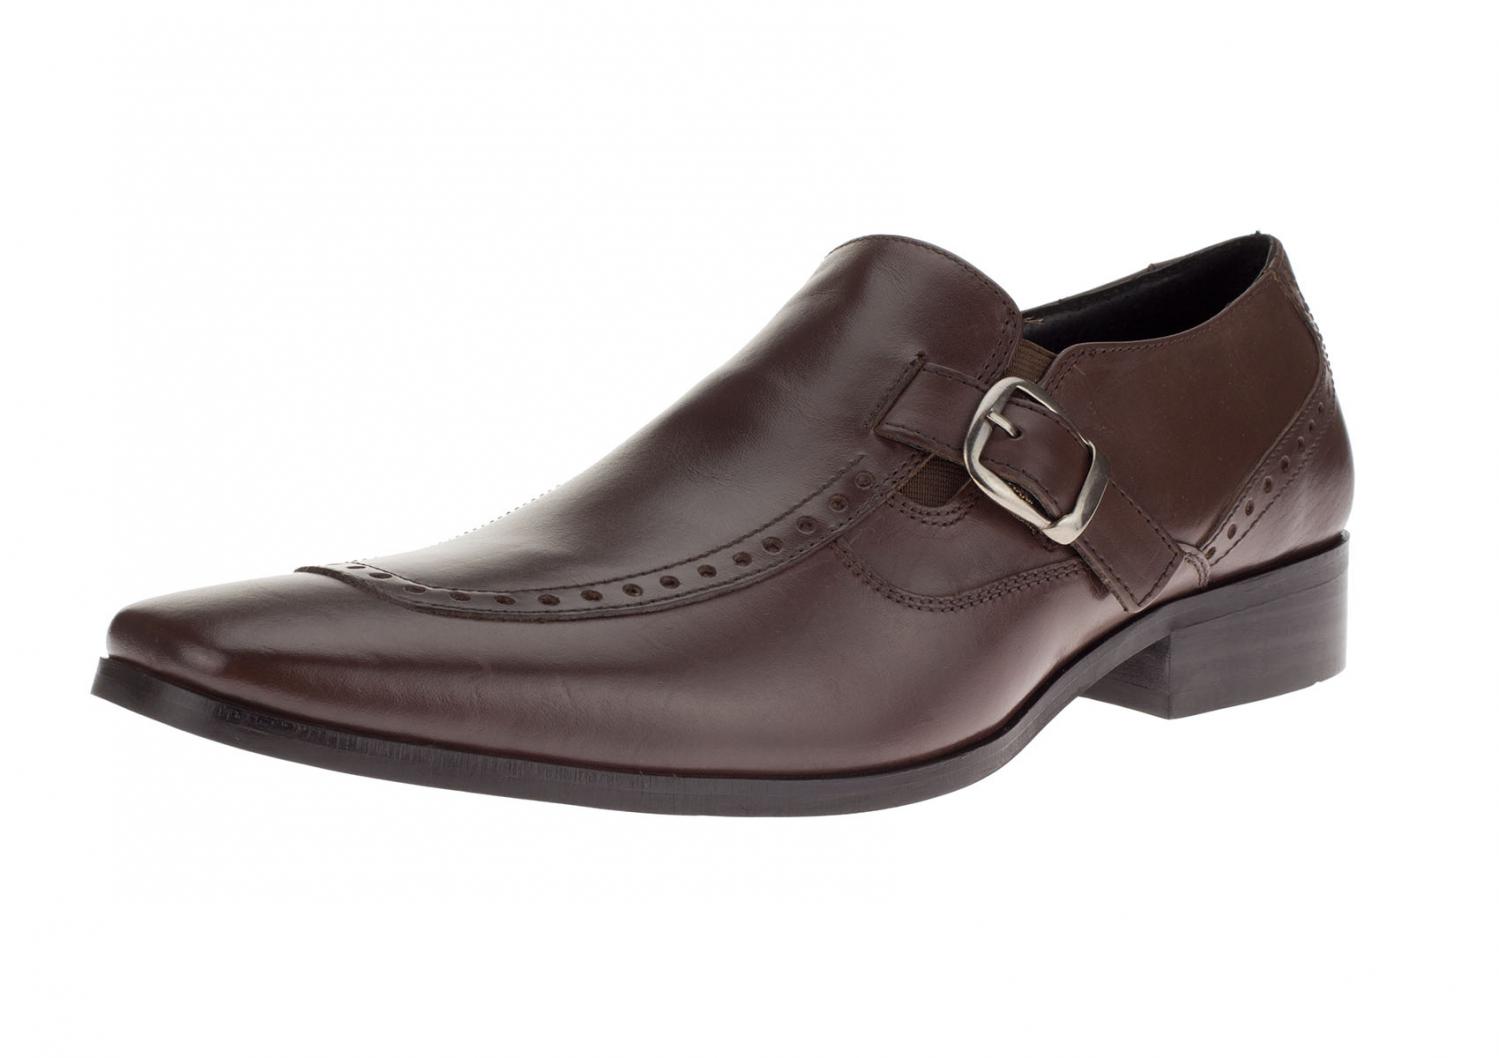 DTI GV Executive Men's Leather Dress Shoe Celio Slip-On Loafer Brown - image 1 of 7